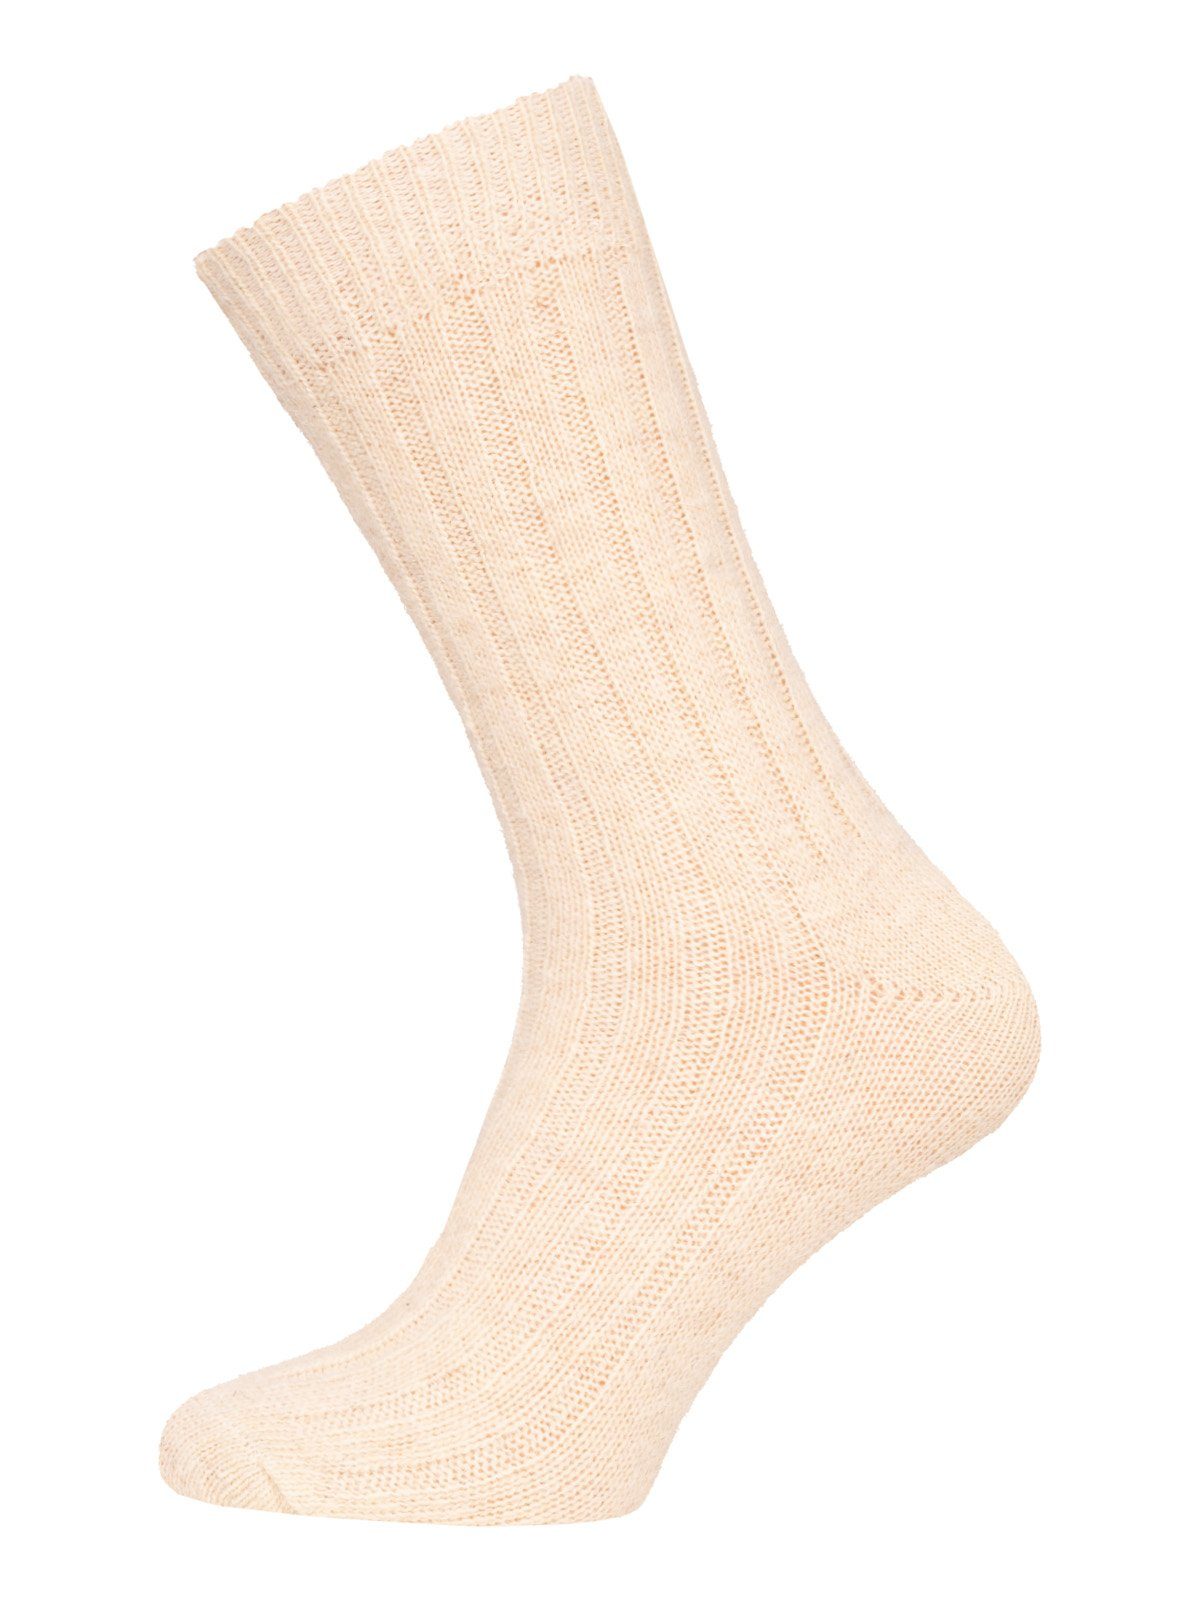 HomeOfSocks Socken Wollsocken aus 95% Wolle (Alpakawolle & Schurwolle) Creme